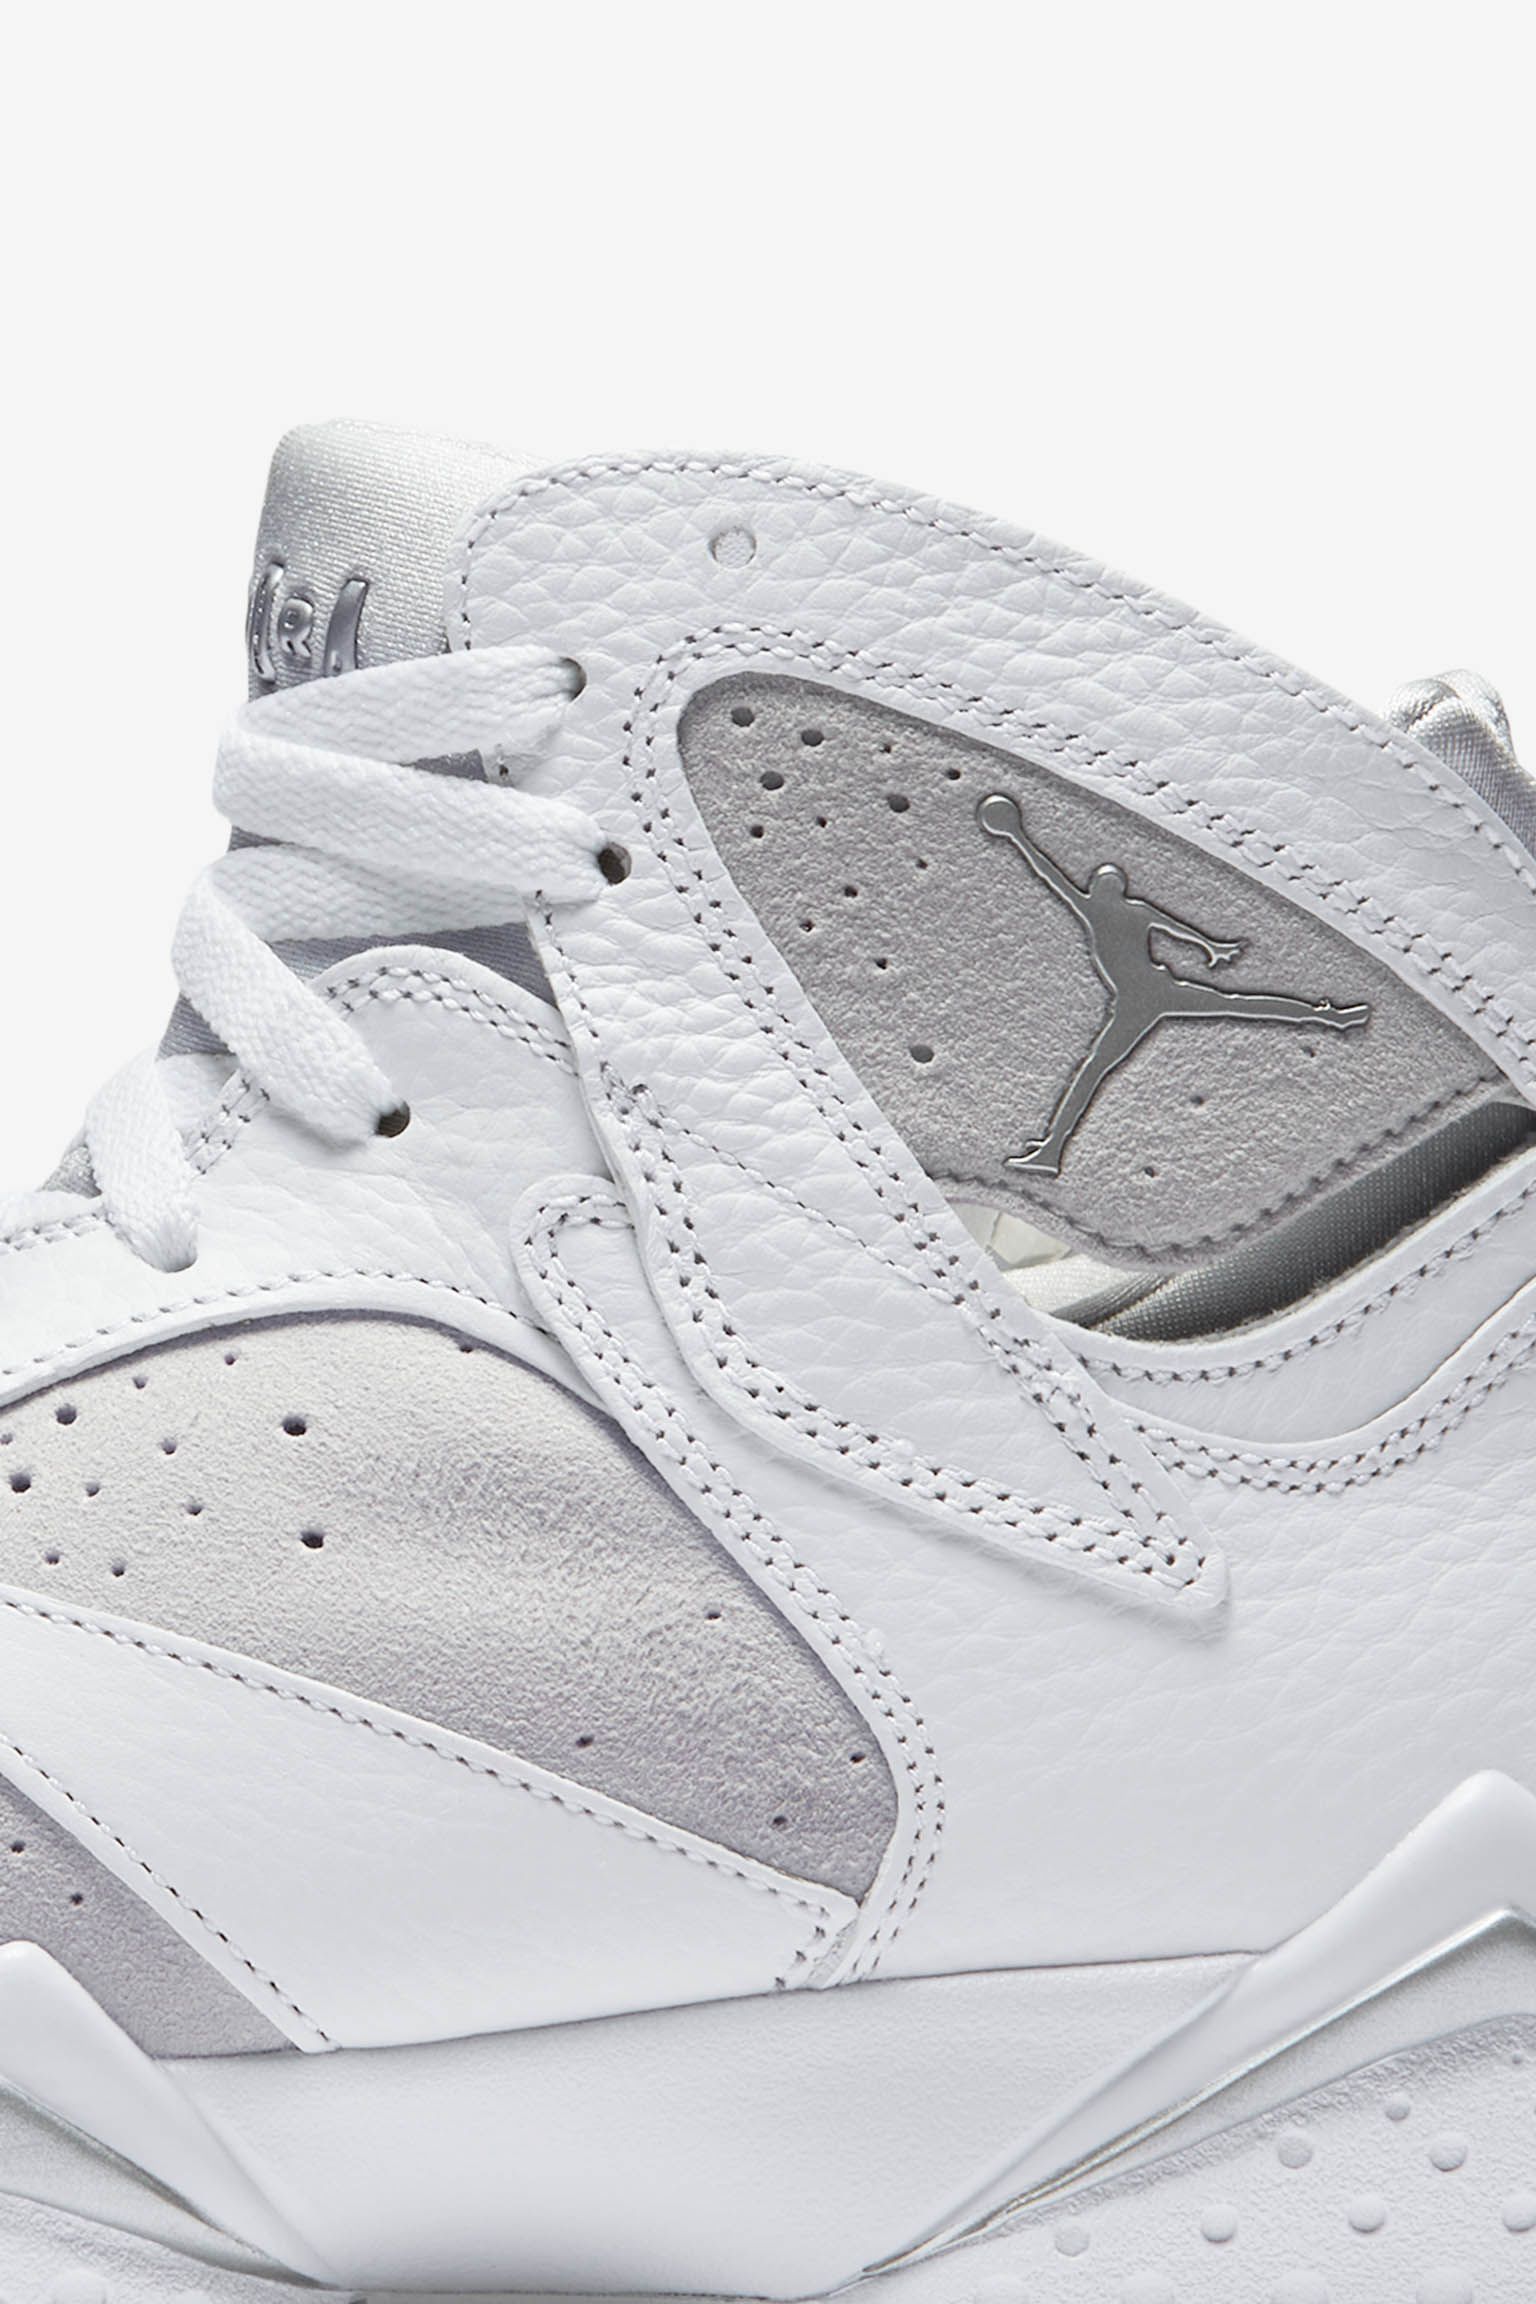 Air Jordan 7 Retro 'White & Pure Platinum' Release Date. Nike⁠+ SNKRS